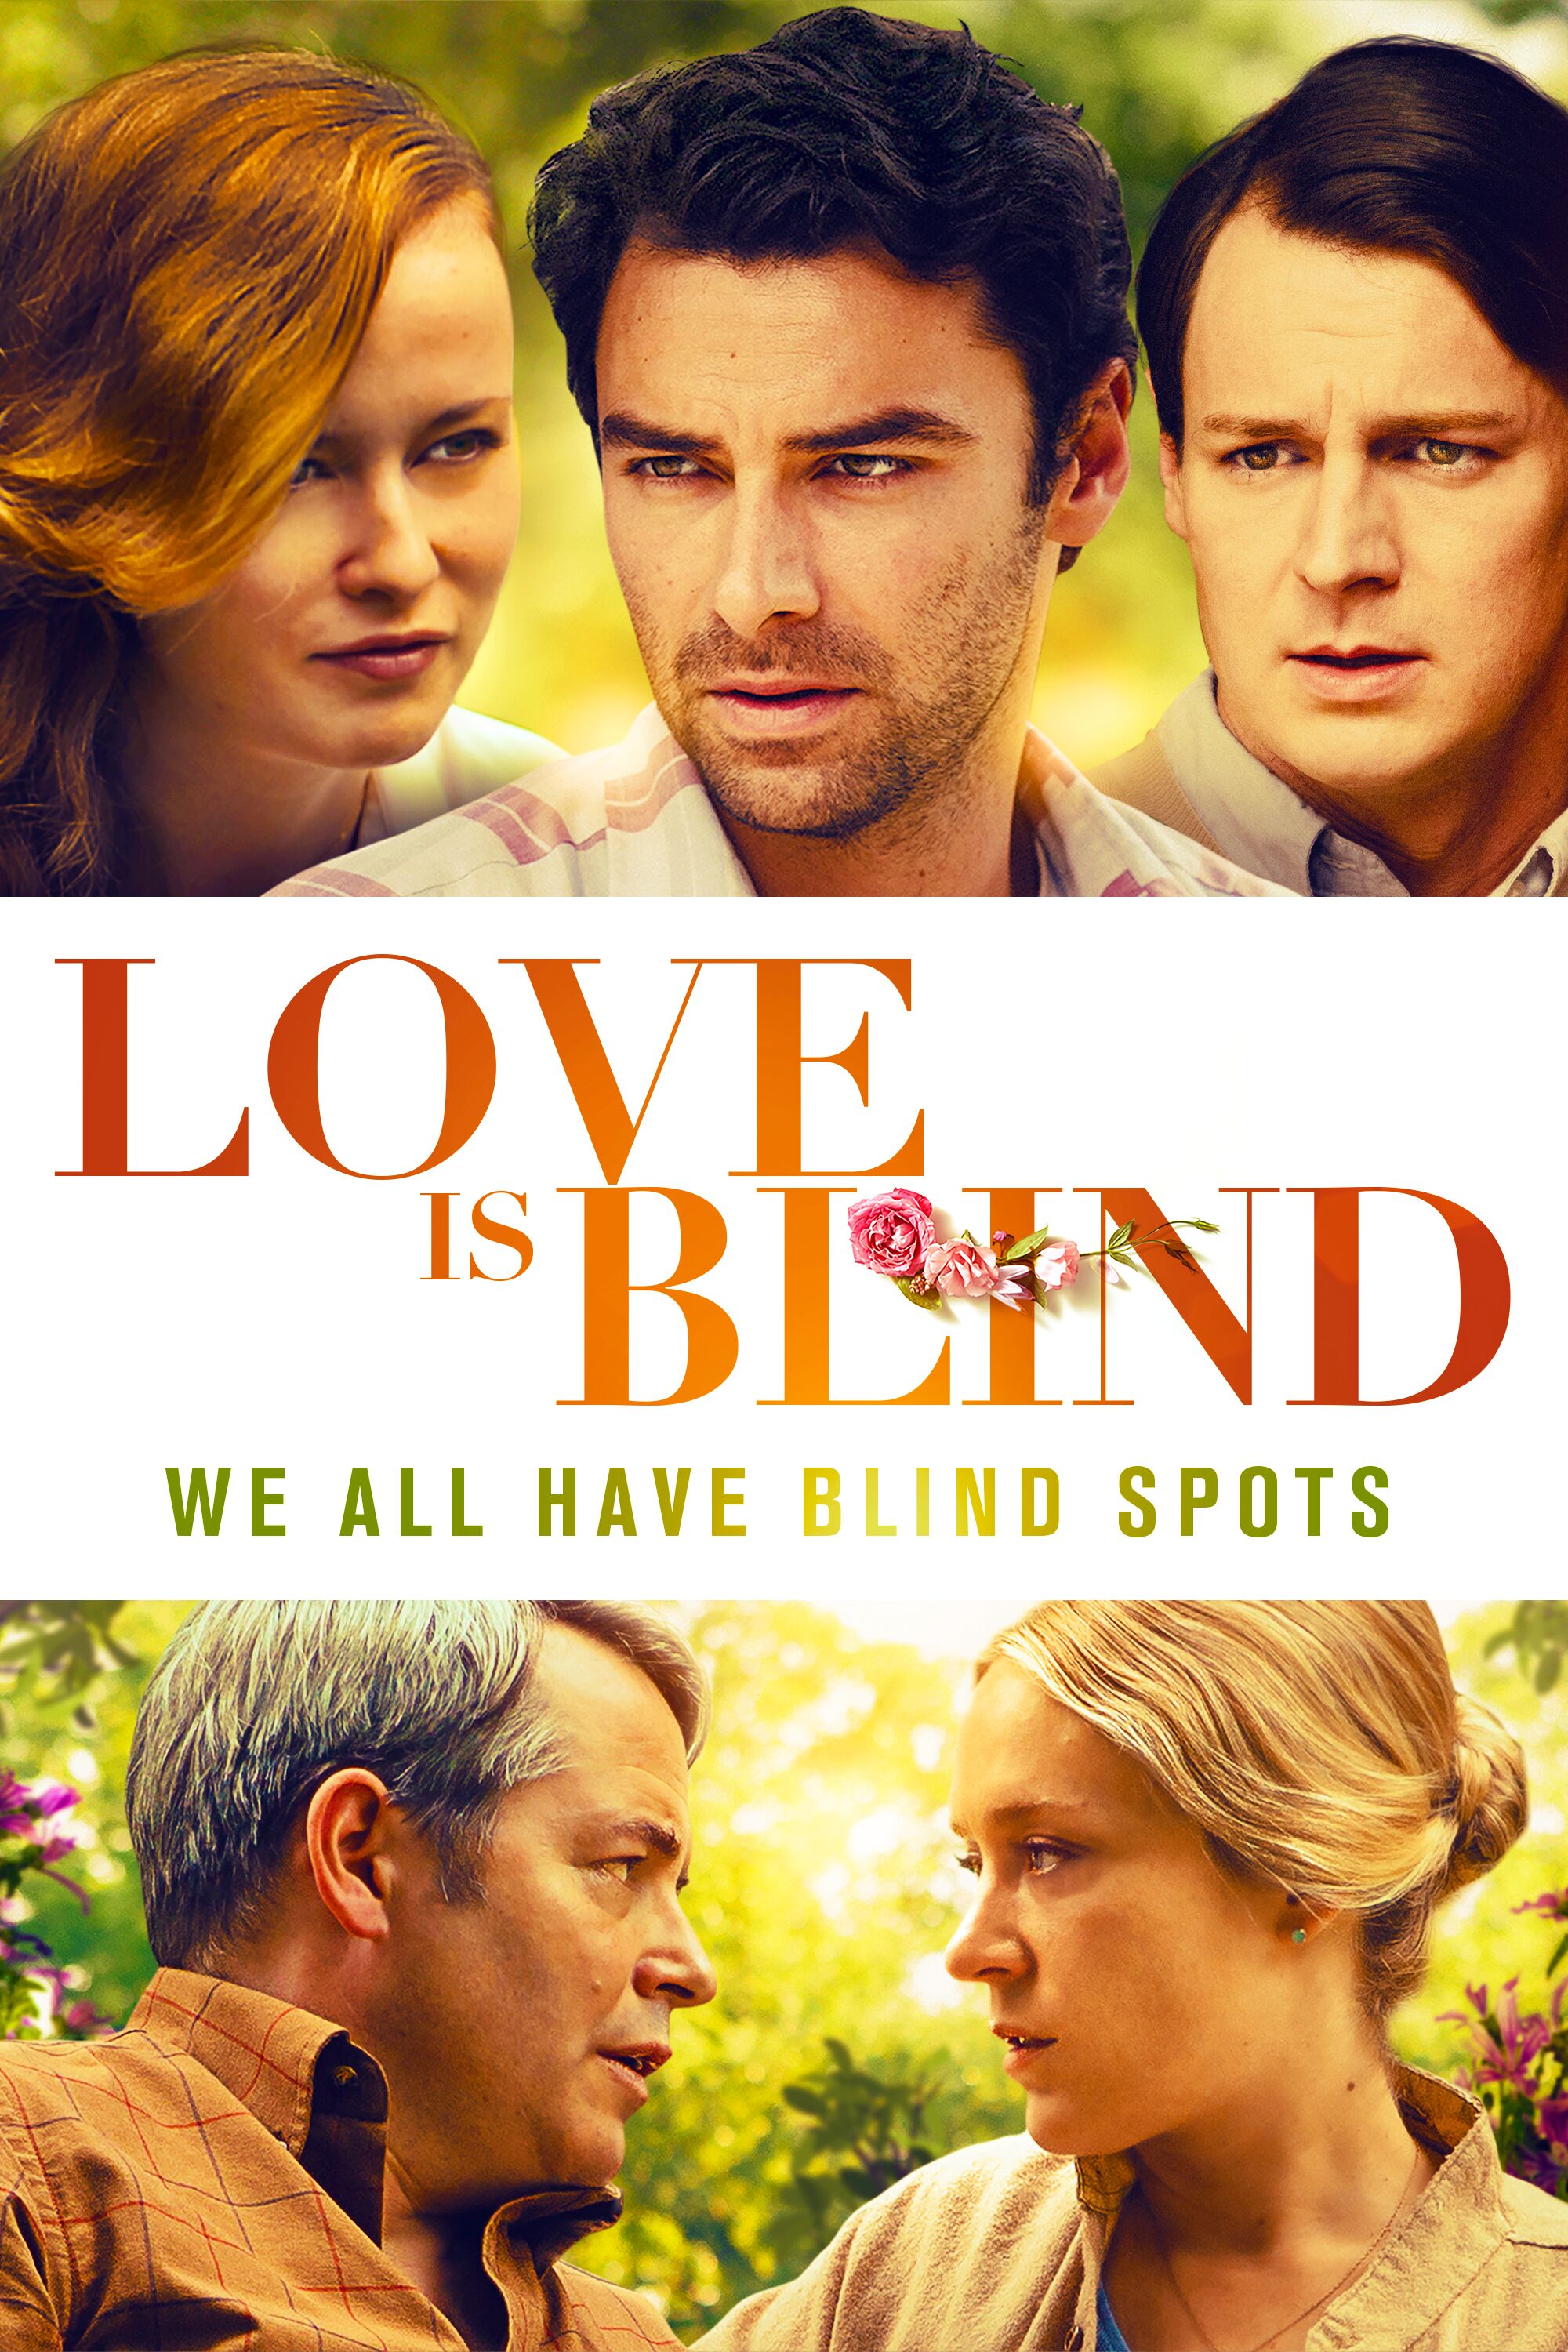 where can i watch love is blind season 1